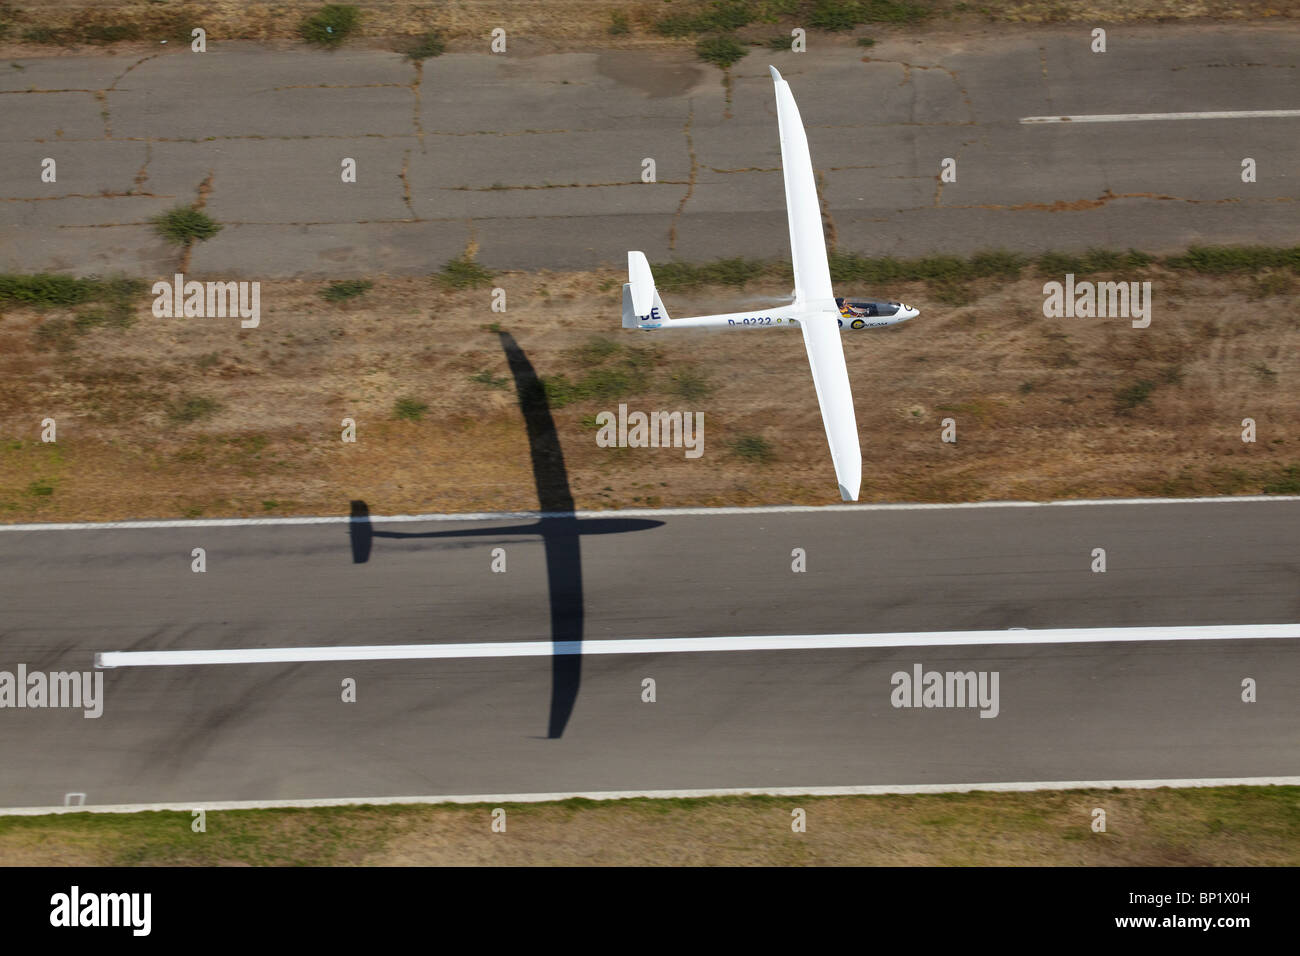 Glider (Germany), Racing in FAI World Sailplane Grand Prix, Landing at Vitacura Airfield, Santiago Chile, South America Stock Photo